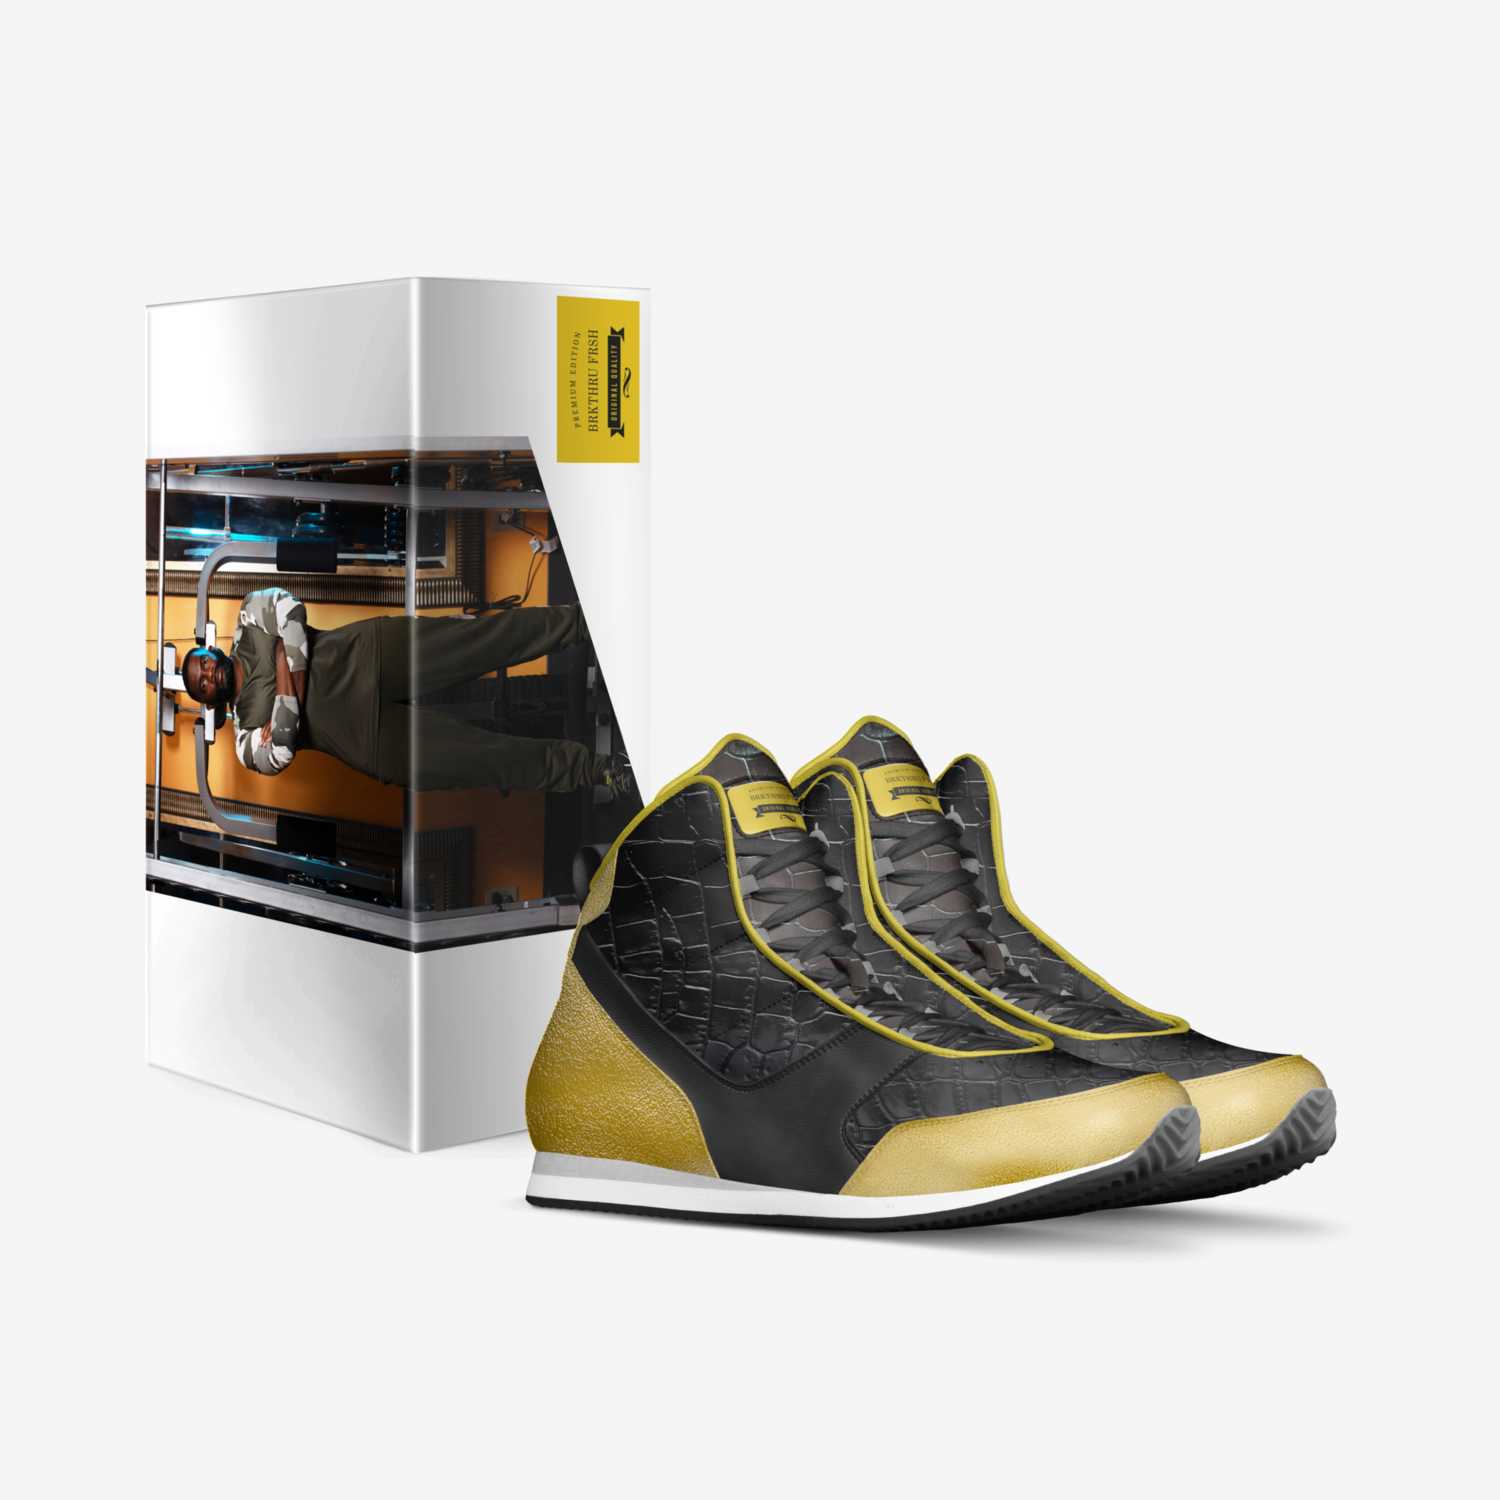 BREAKTHRU FRESH custom made in Italy shoes by Breakthru Team | Box view